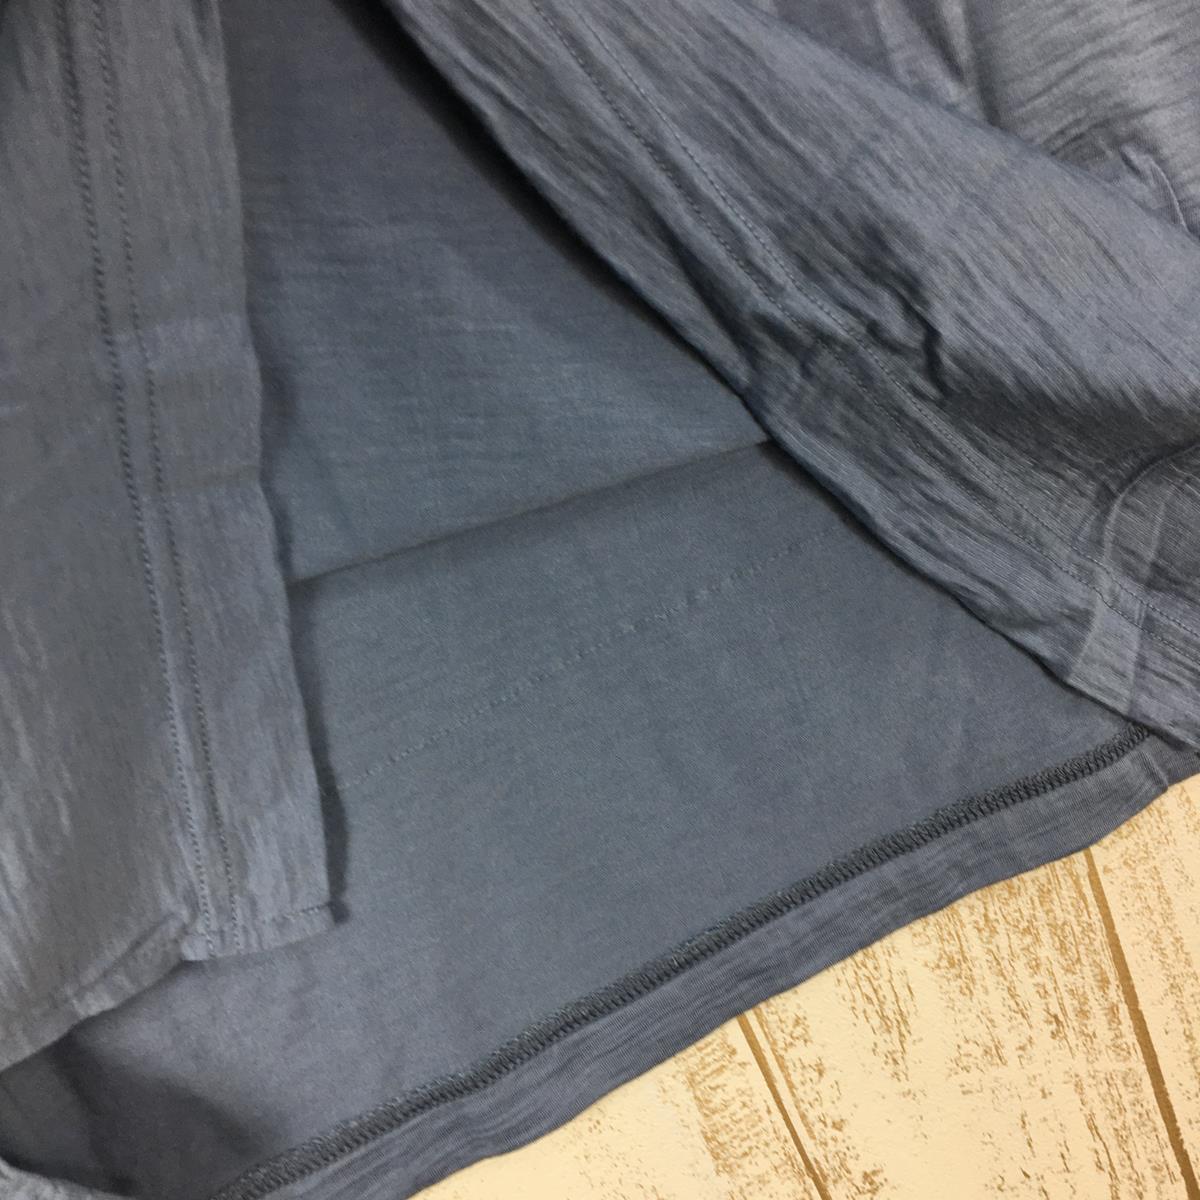 【UNISEX M】 山と道 100% メリノ ライト カンガルー ポケット Tシャツ 100% Merino Light Kangaroo Pocket T-Shirt メリノウール YAMATOMICHI ブルー系